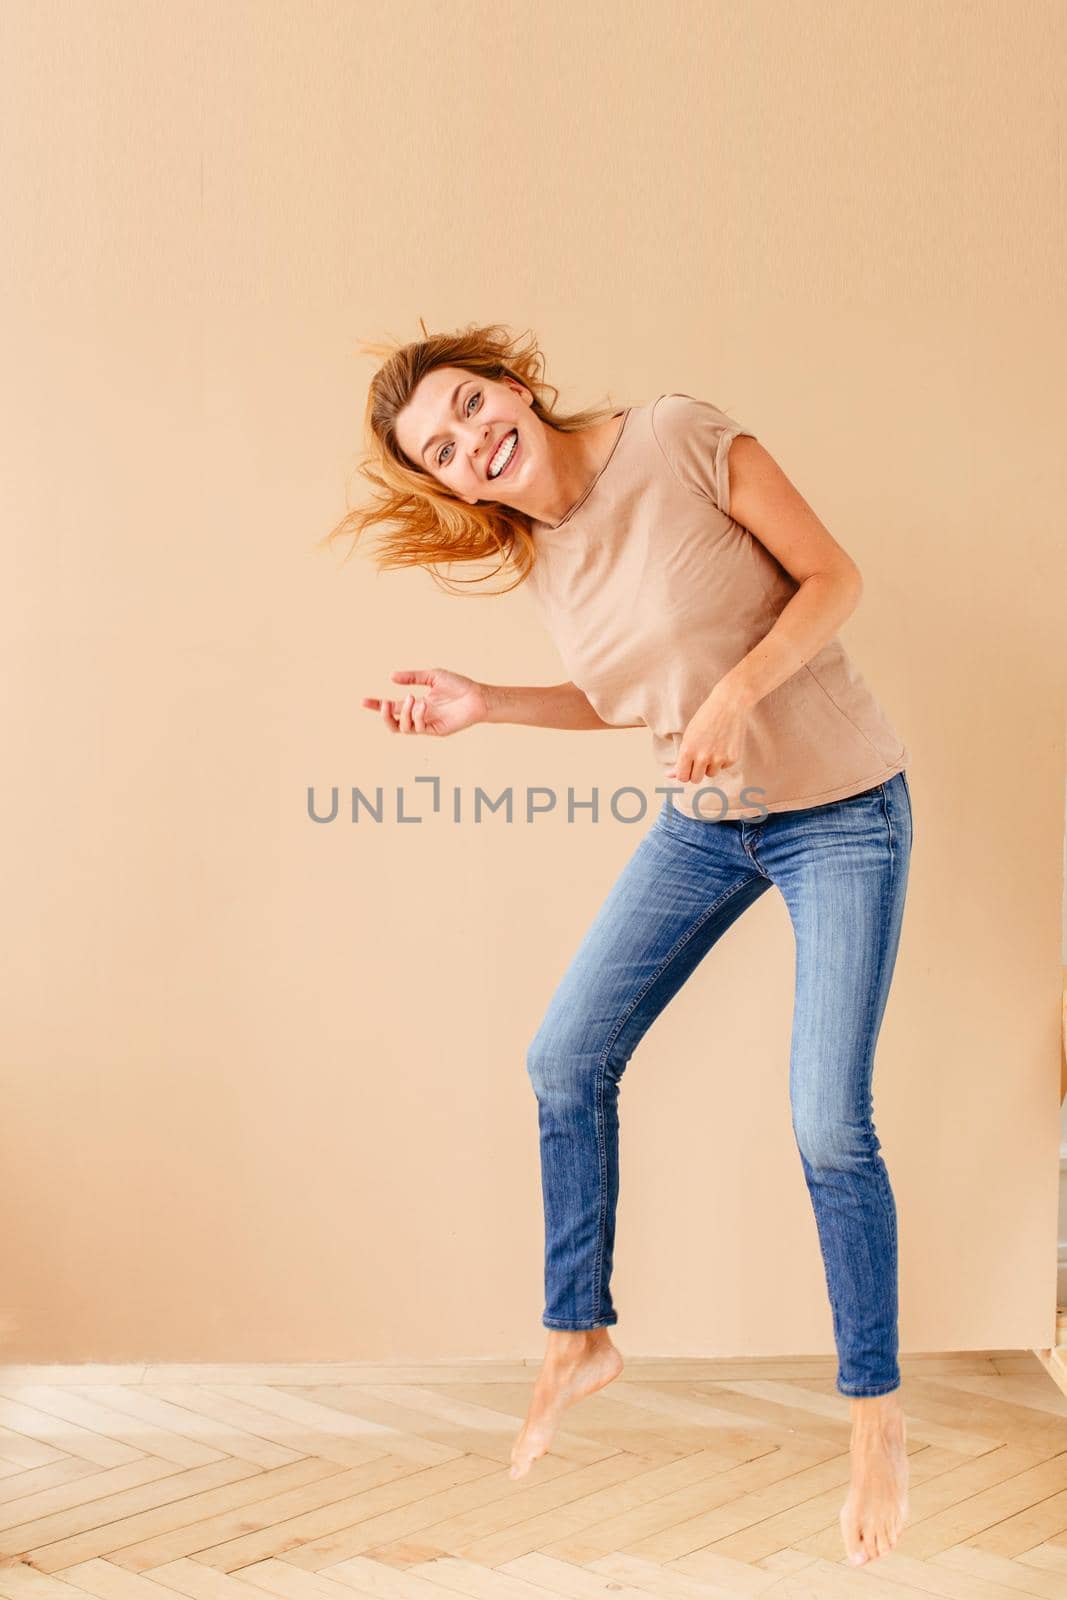 Portrait of a joyful young woman jumping by Demkat